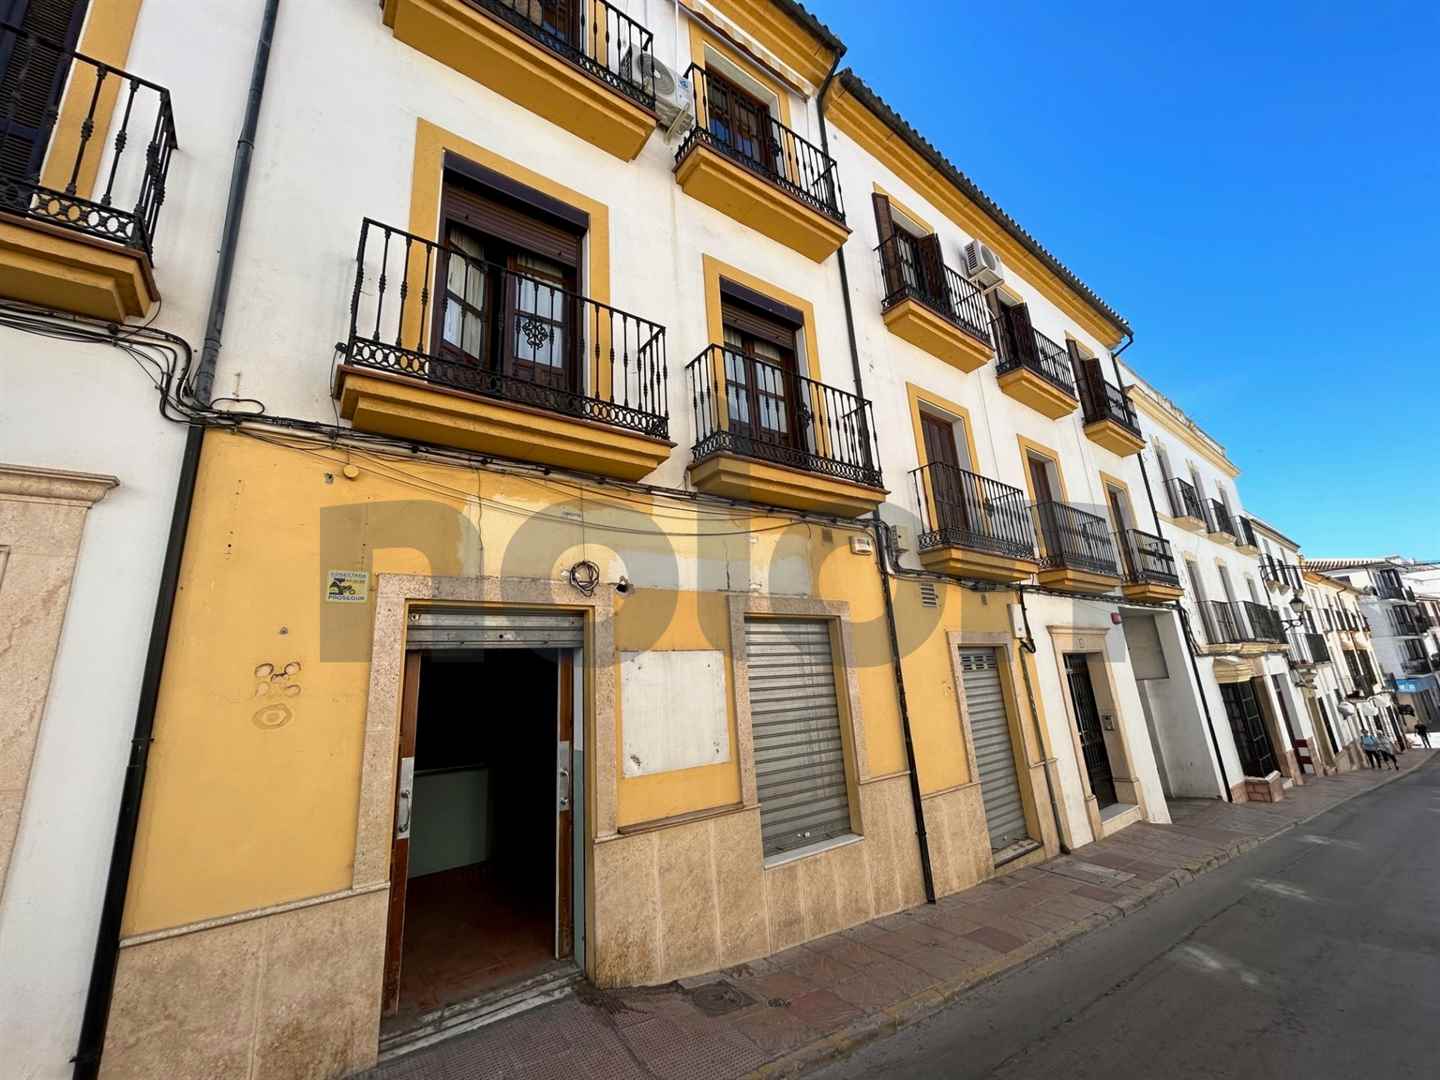 Local sale in Ronda Málaga